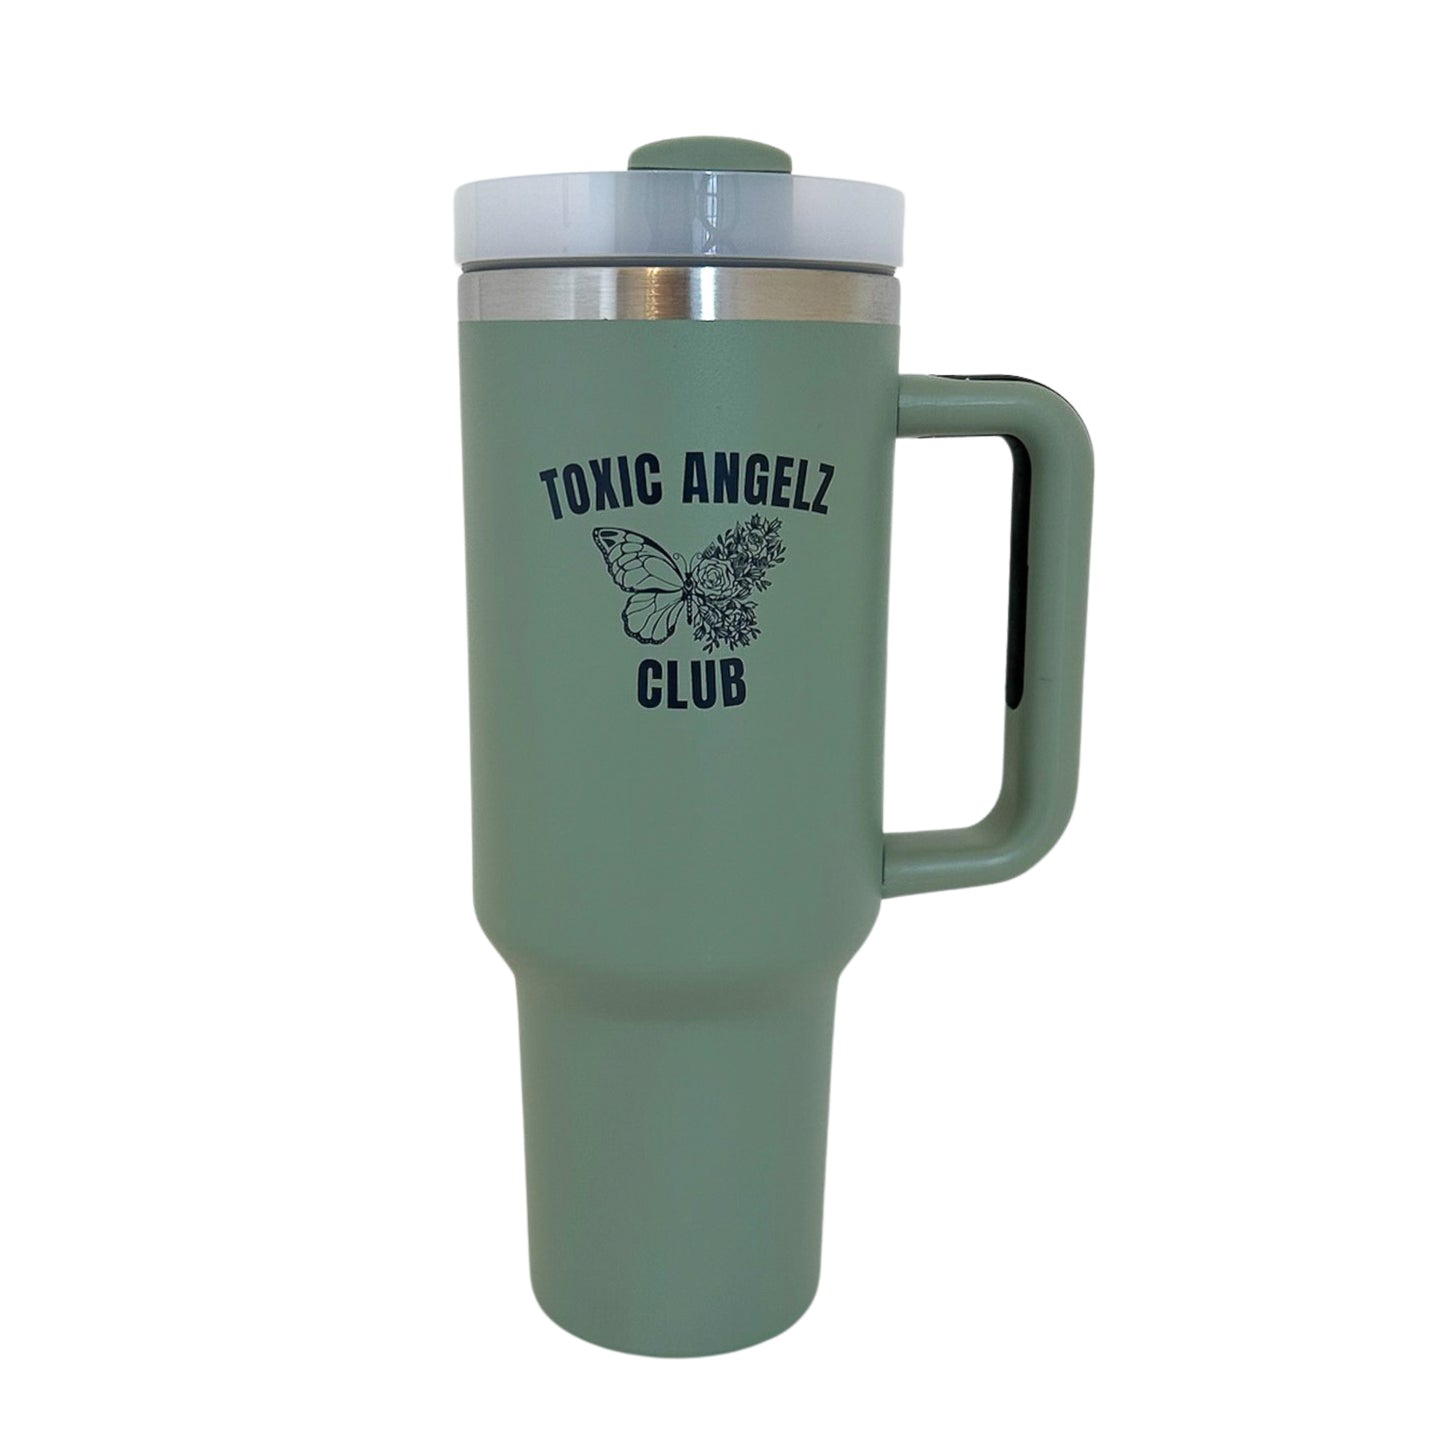 Toxic Angelz Club Stainless Steel Tumbler